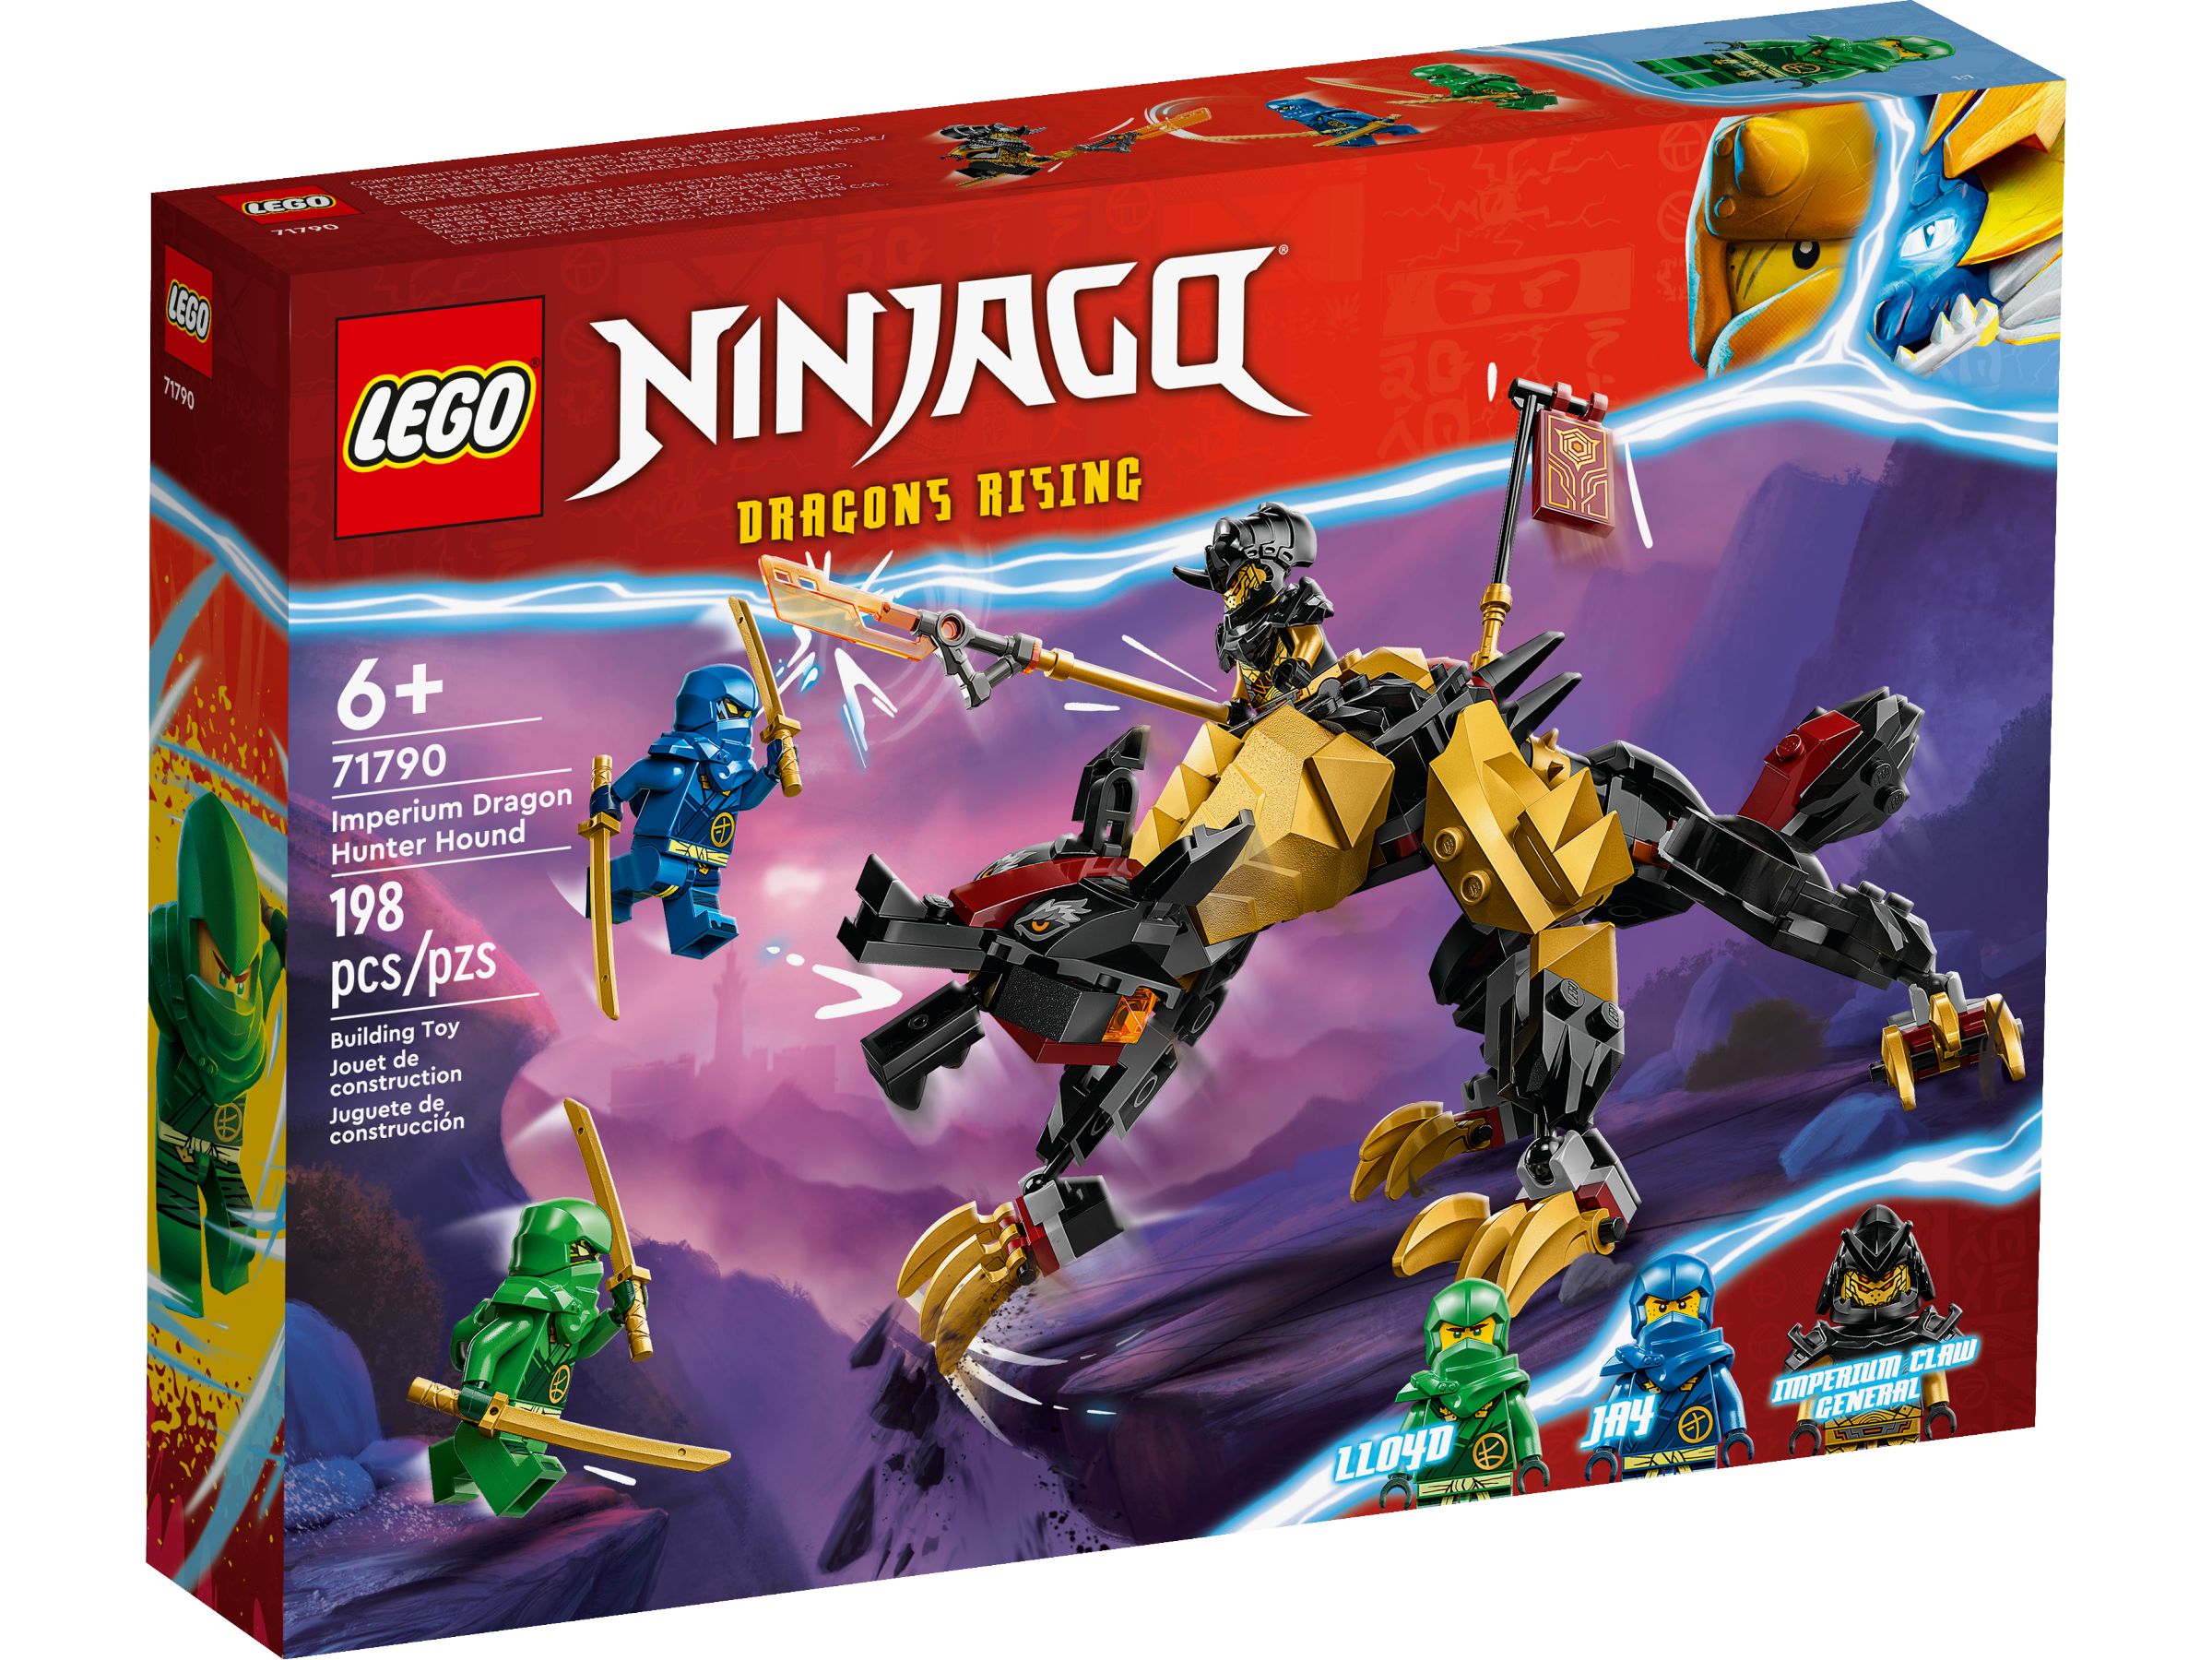 LEGO Ninjago 71790 Jagdhund des kaiserlichen Drachenjägers LEGO_71790_alt1.jpg